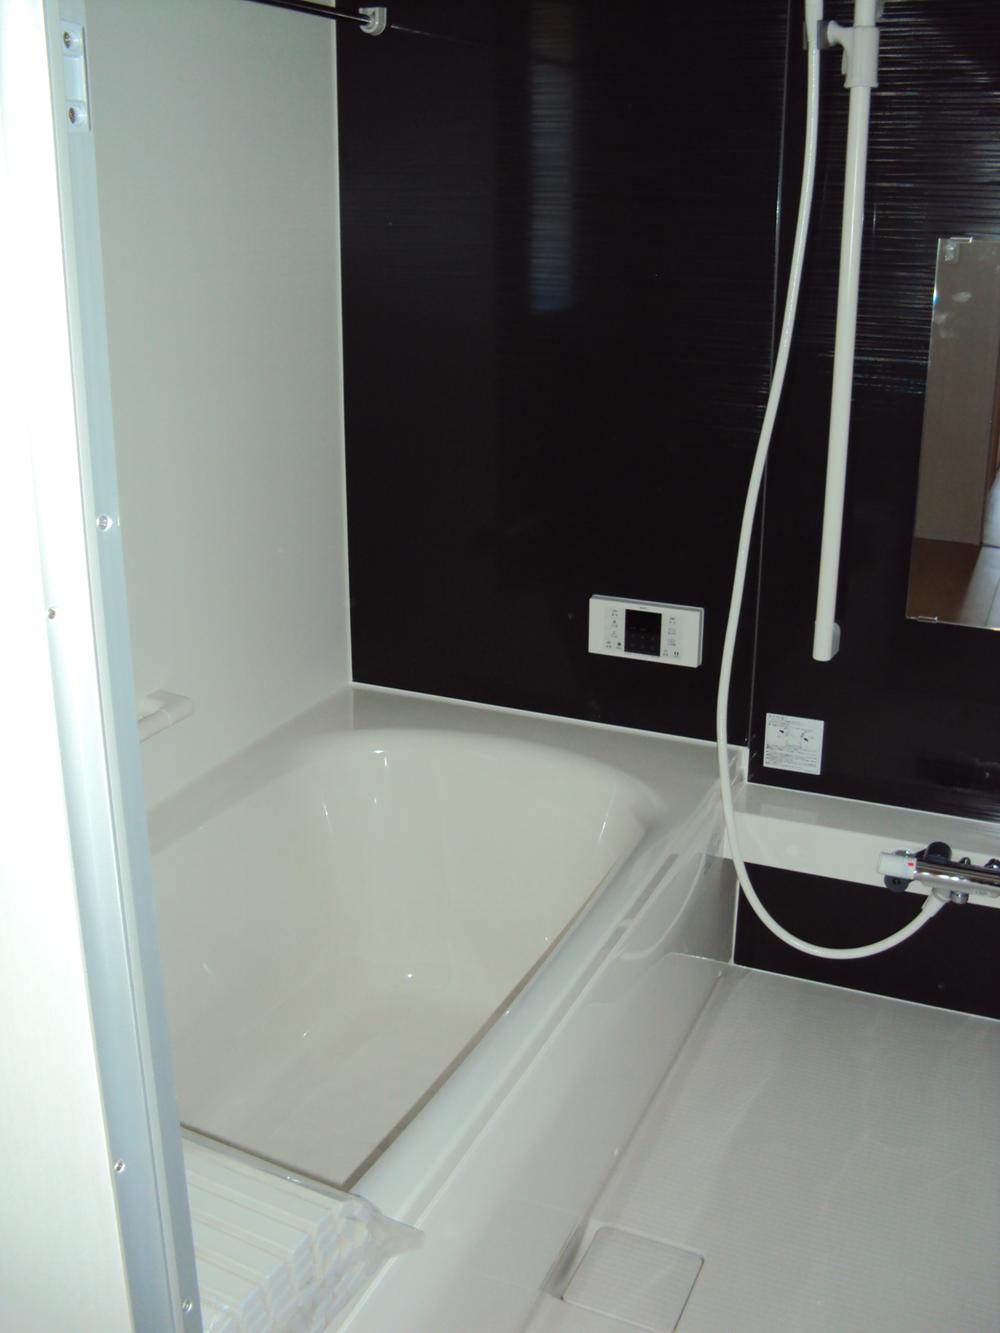 Same specifications photo (bathroom). Bathroom enforcement example photo